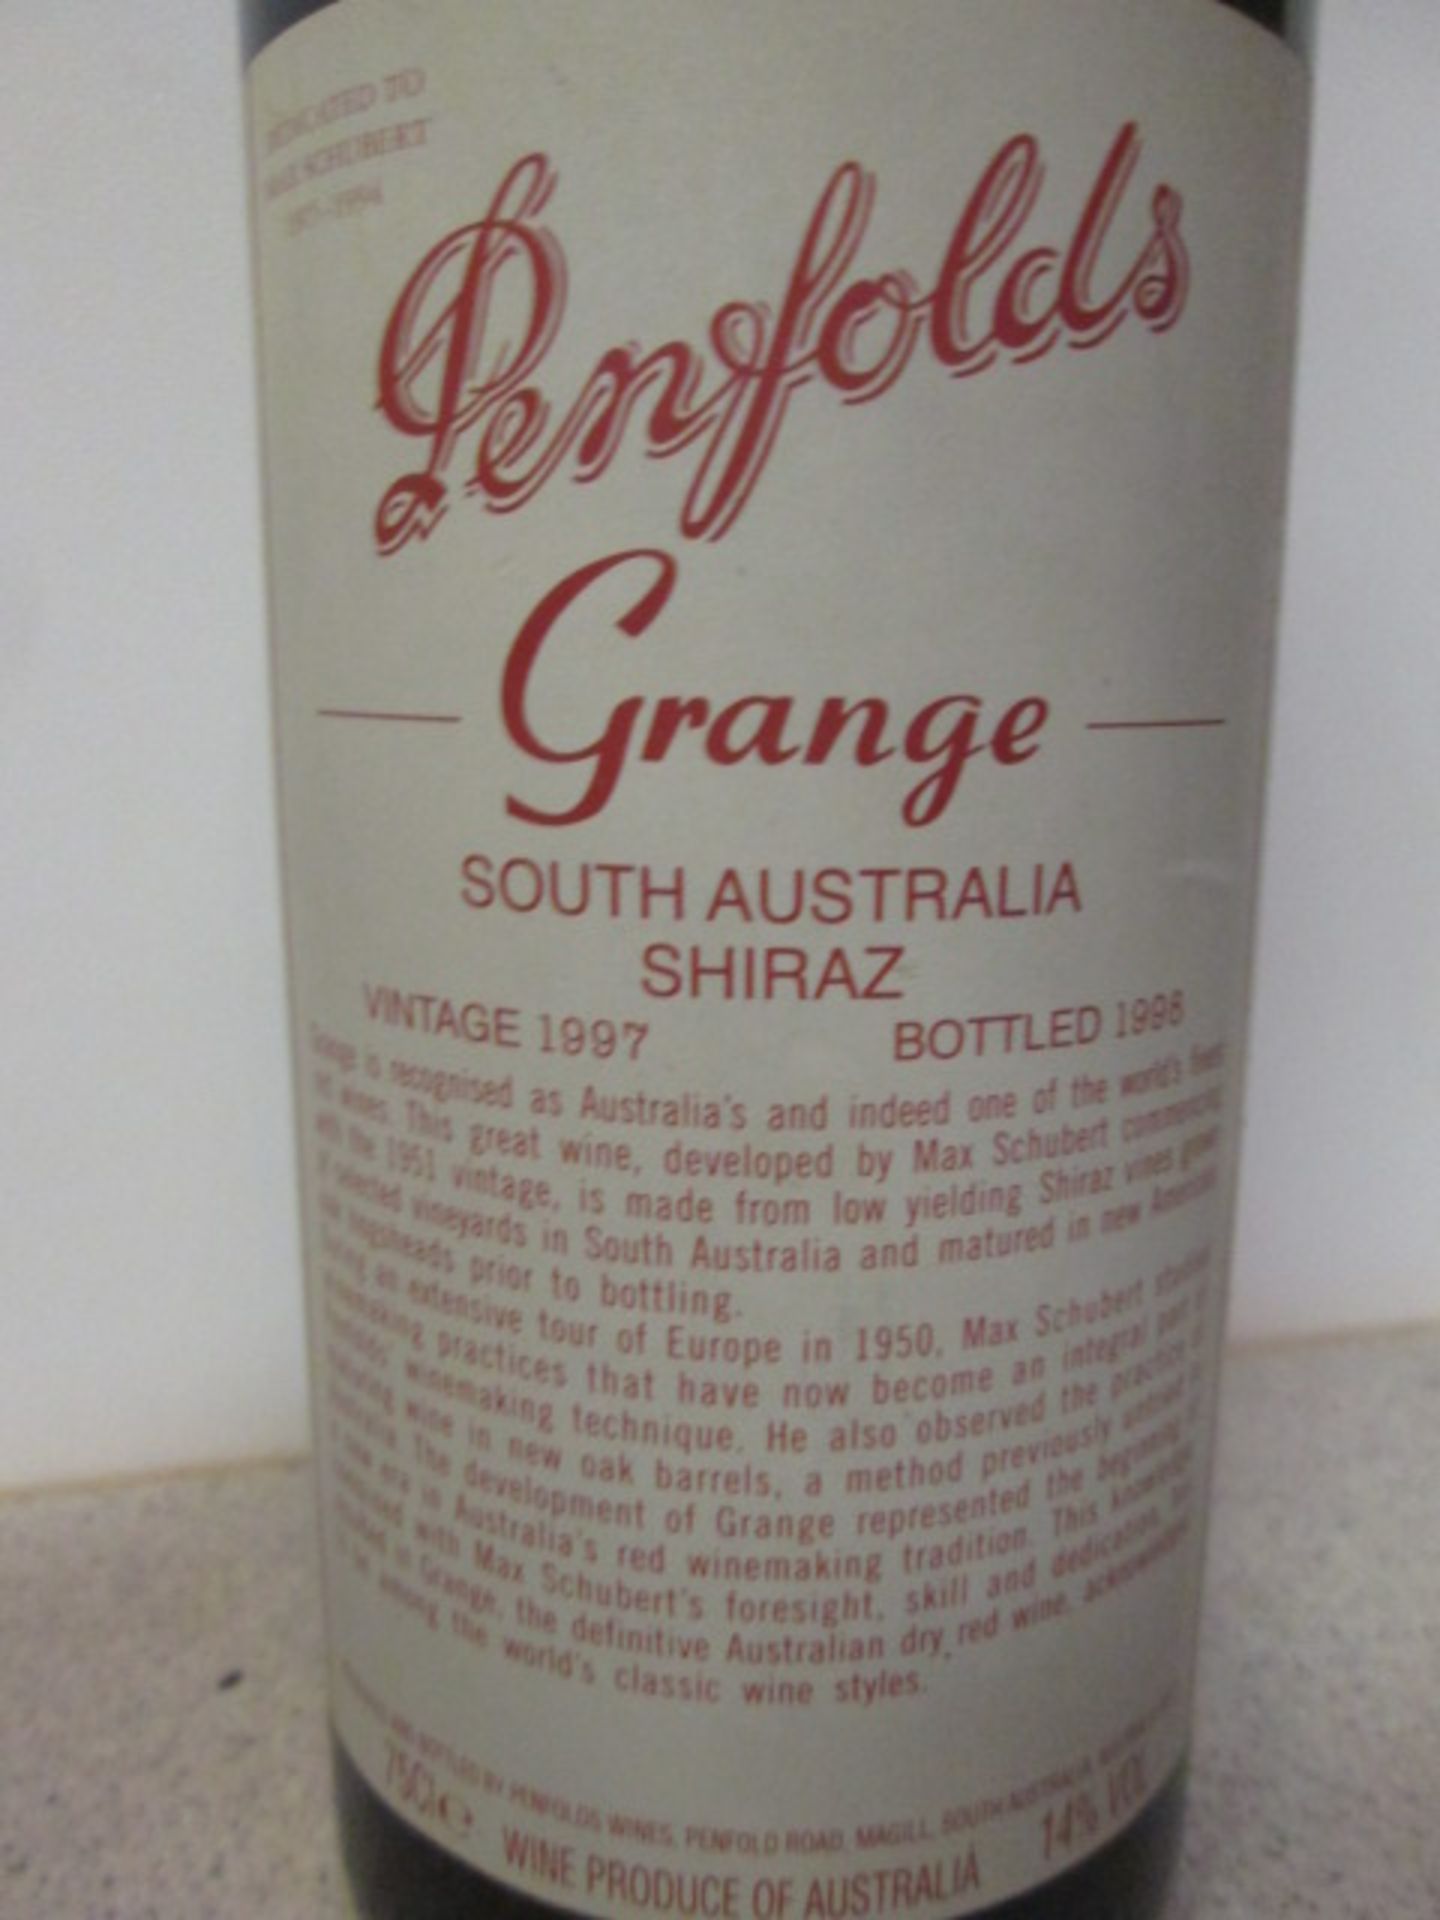 Bottle of Penfolds Grange South Australia Shiraz, Vintage 1997 Bottled 1998. - Image 2 of 2